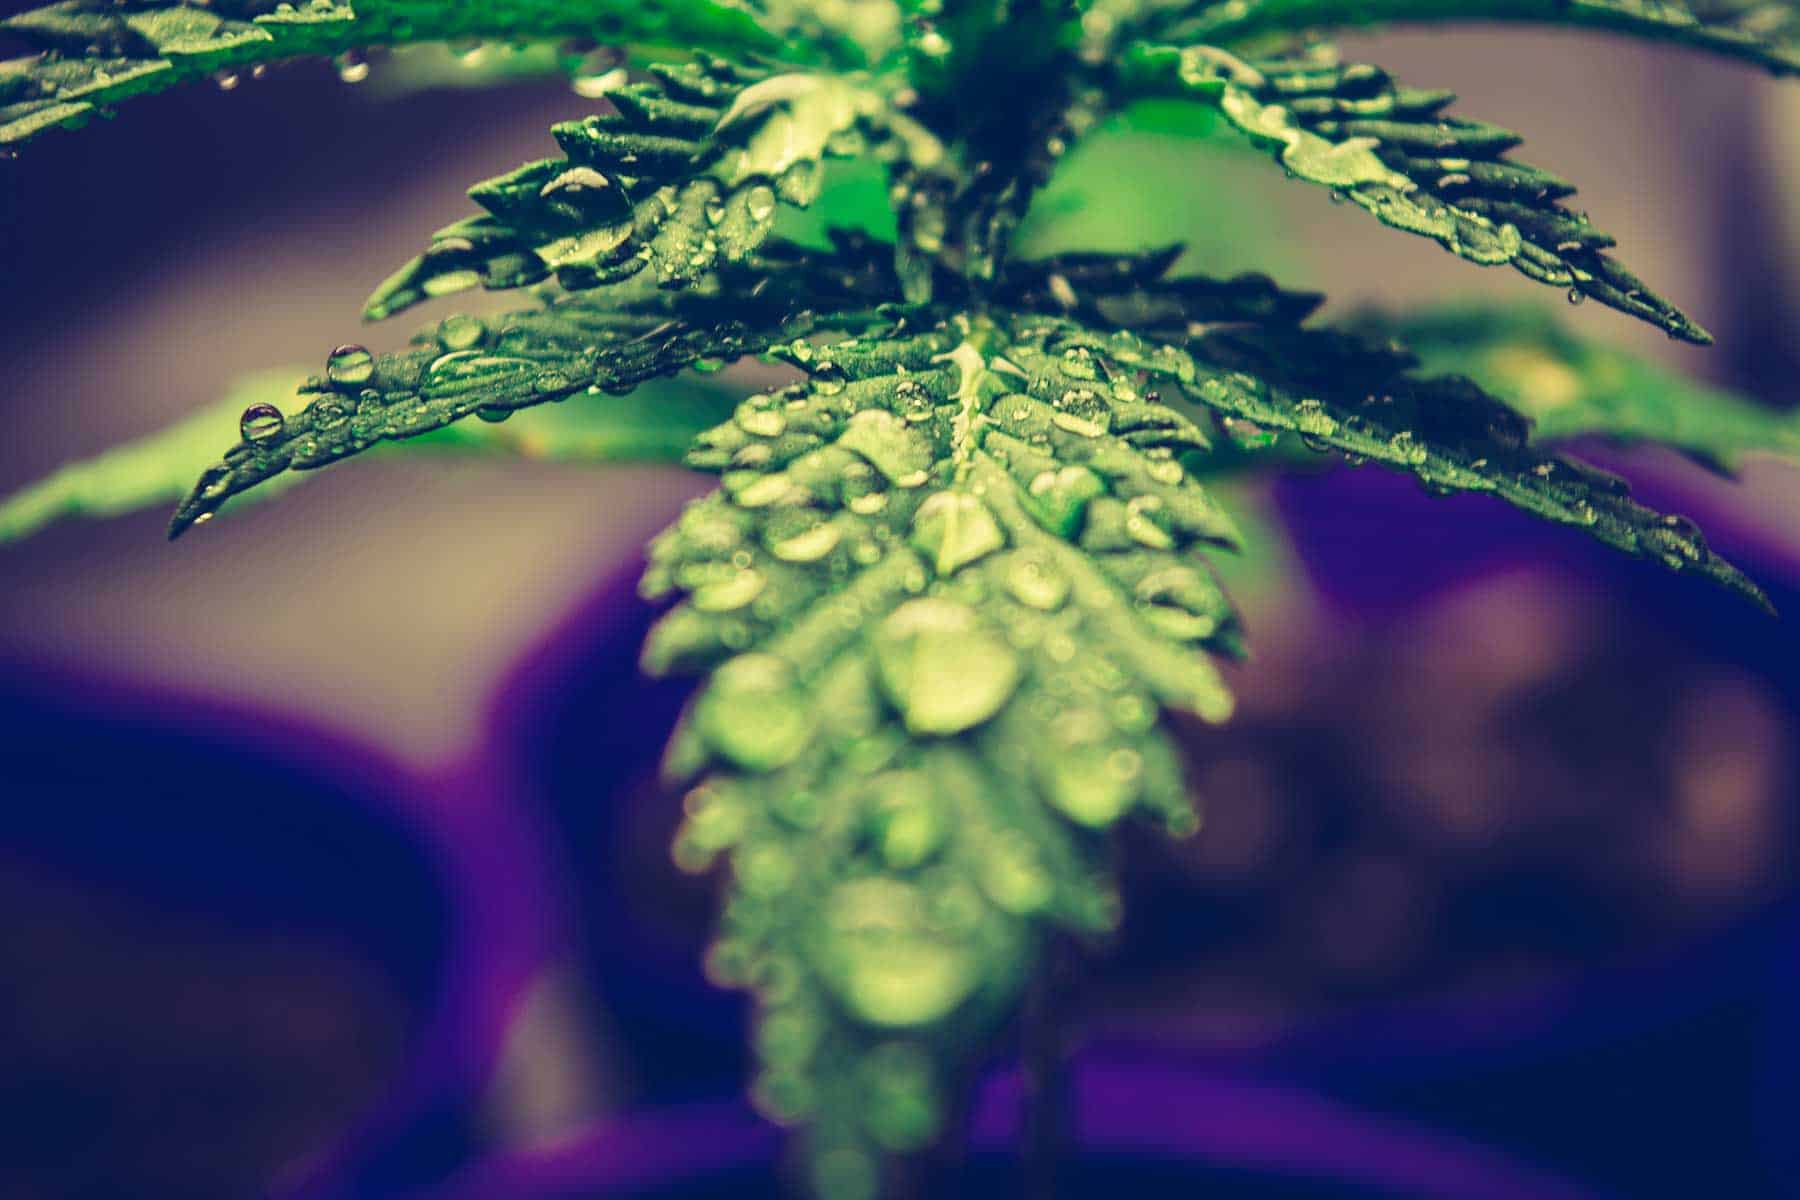 Microdosing Cannabis: A New Way of Medical Marijuana Consumption